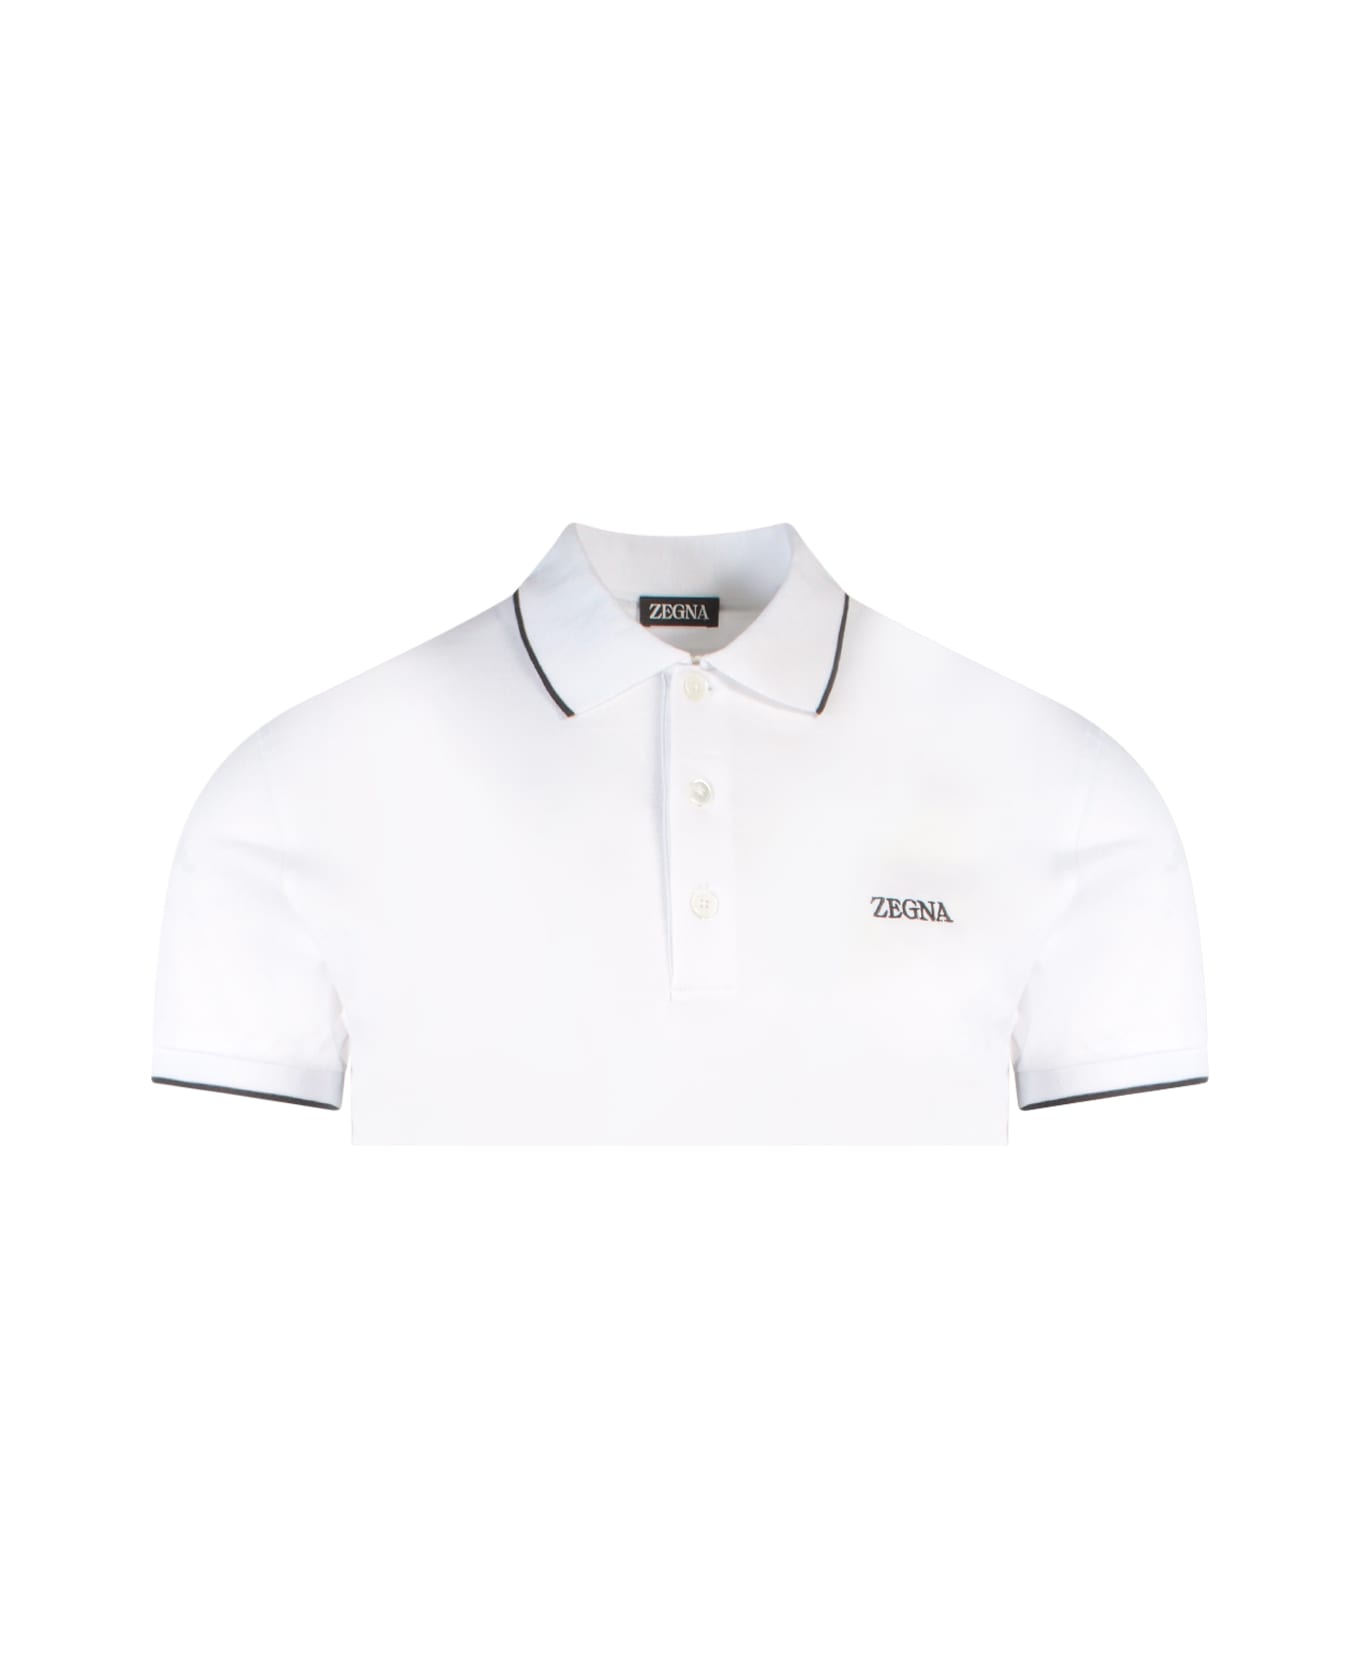 Zegna Polo Shirt - WHITE